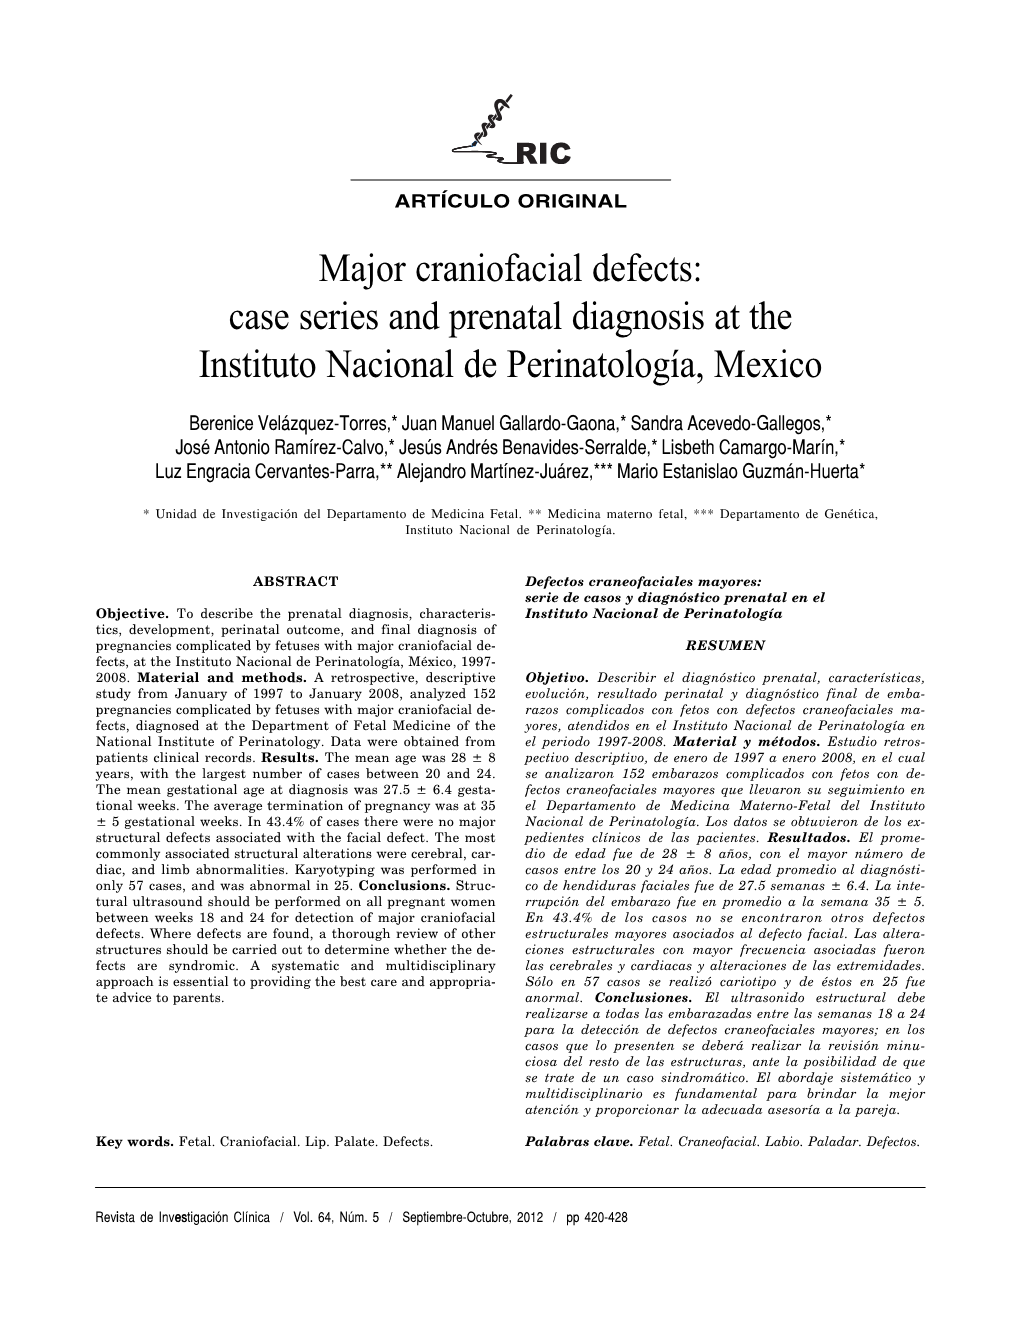 Major Craniofacial Defects: Case Series and Prenatal Diagnosis at the Instituto Nacional De Perinatología, Mexico